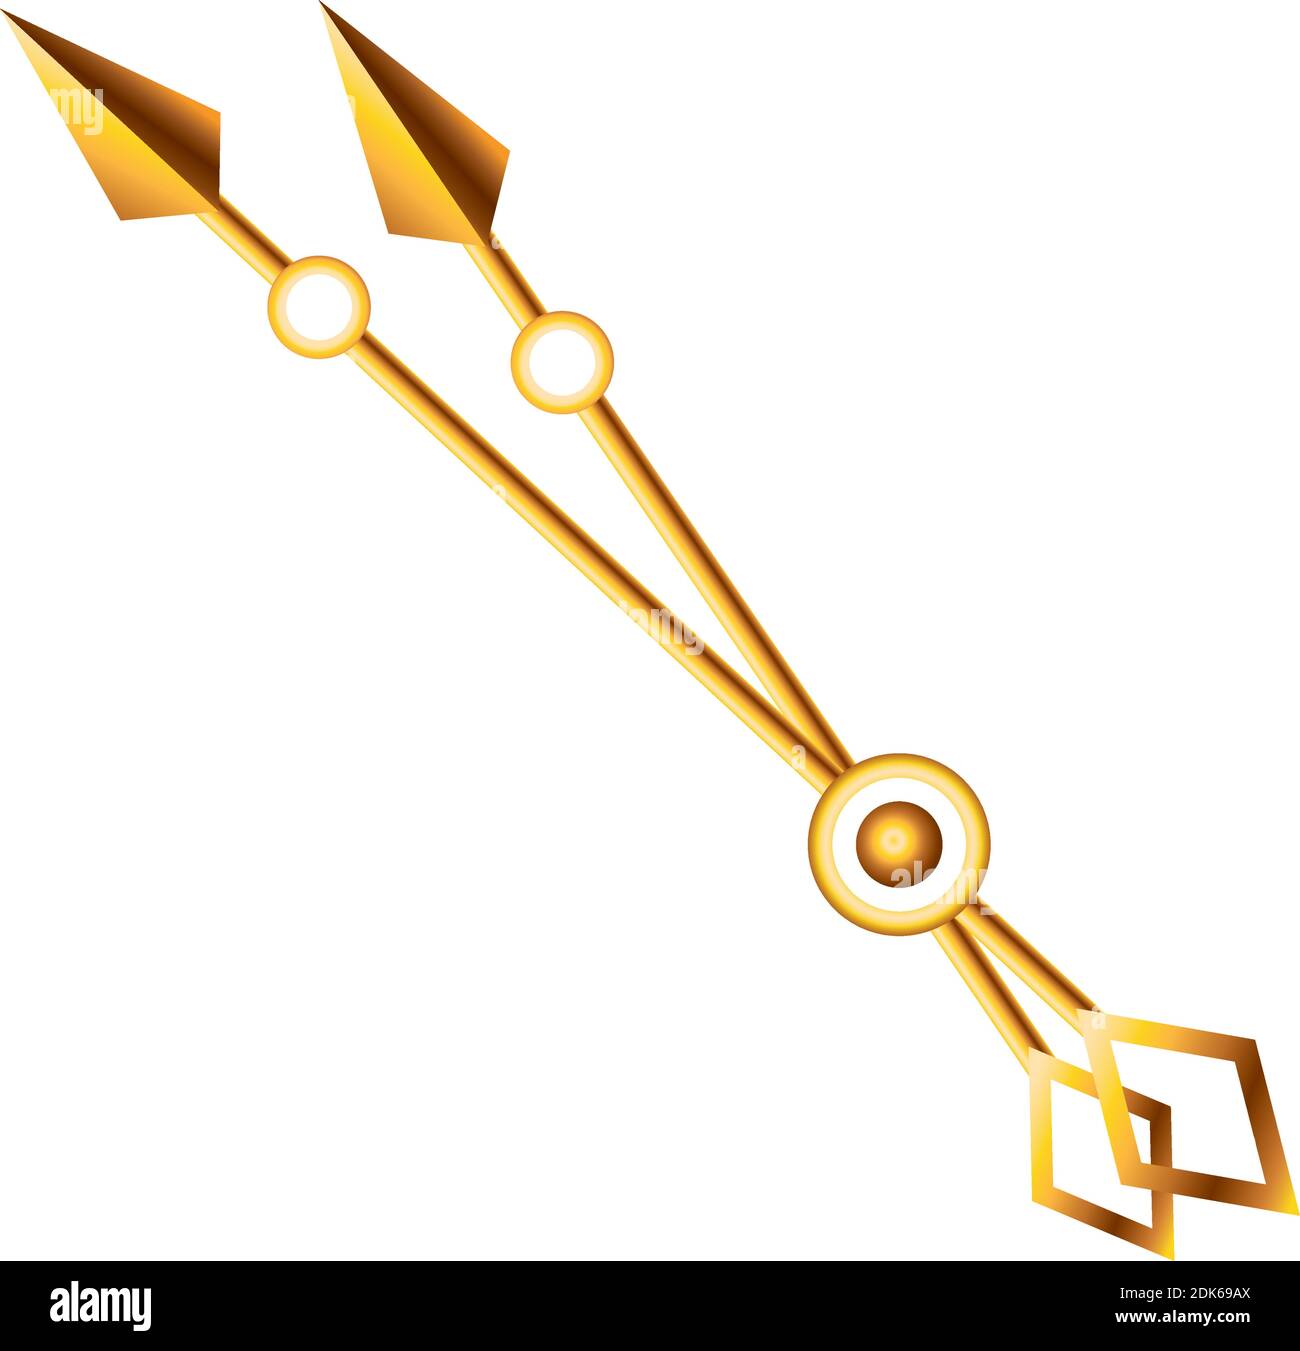 golden clock hands decorative icons vector illustration design Stock Vector